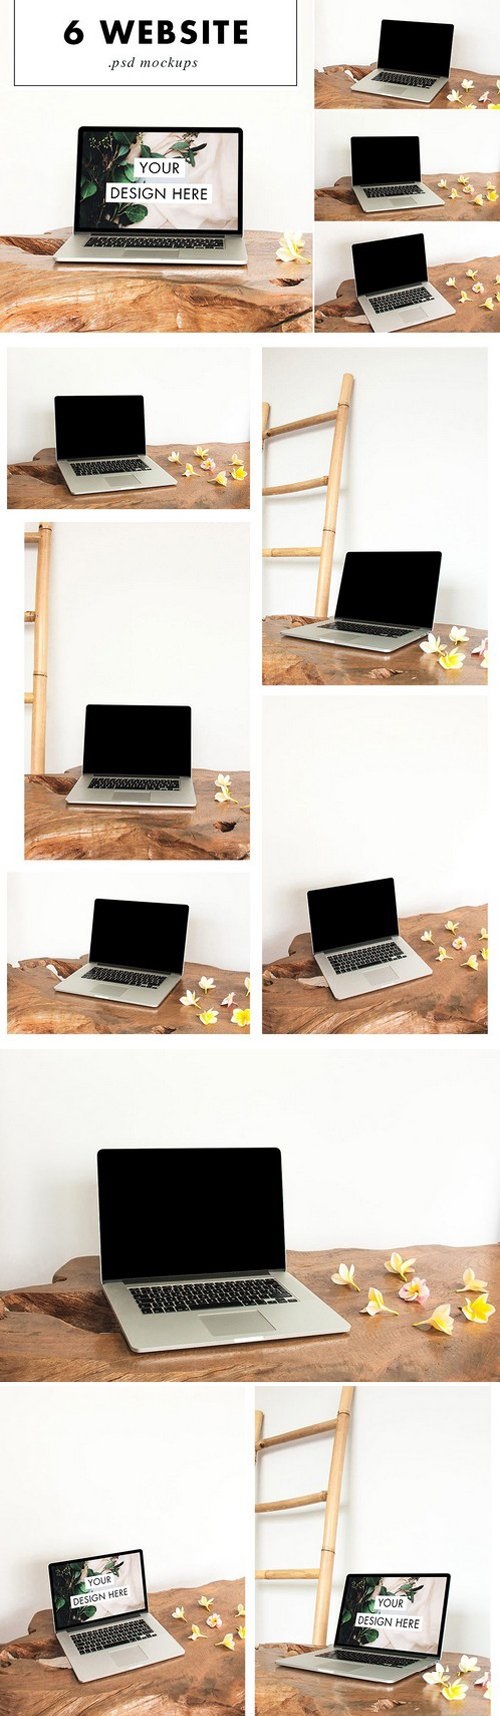 Mac Laptop Mockup PSD Wood Desk 1869120